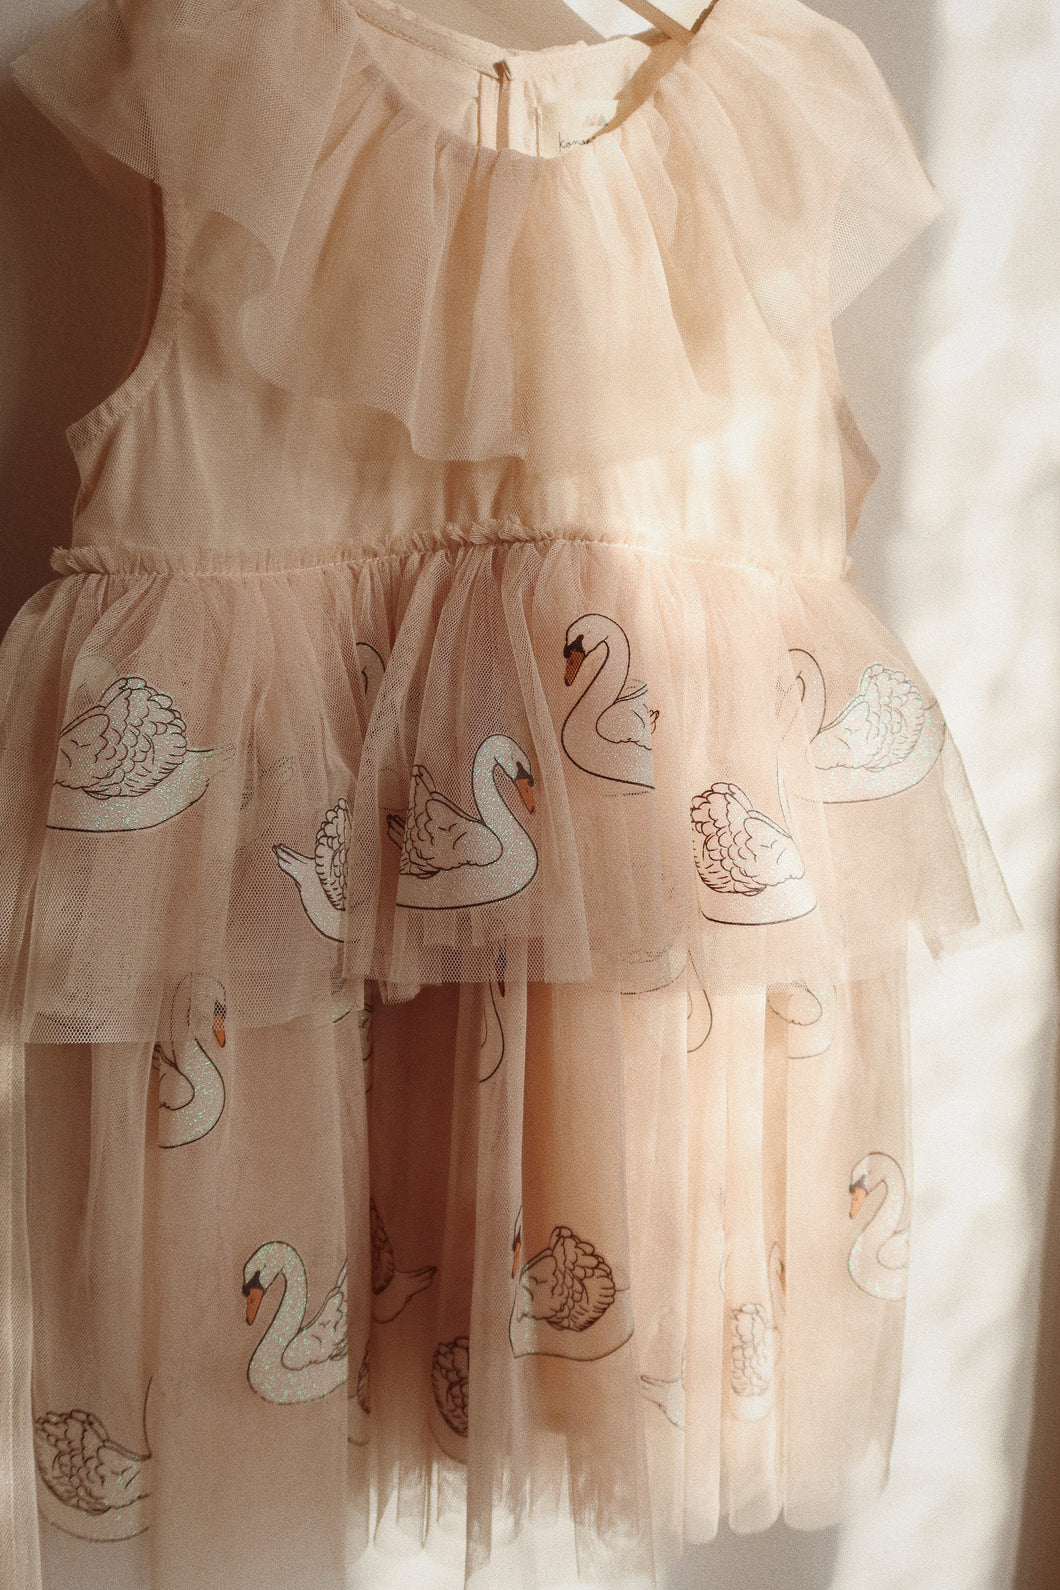 FAYETTE DRESS SWAN GLITTER / コンゲススロイド キッズ ドレス チュール ワンピース スワン 白鳥